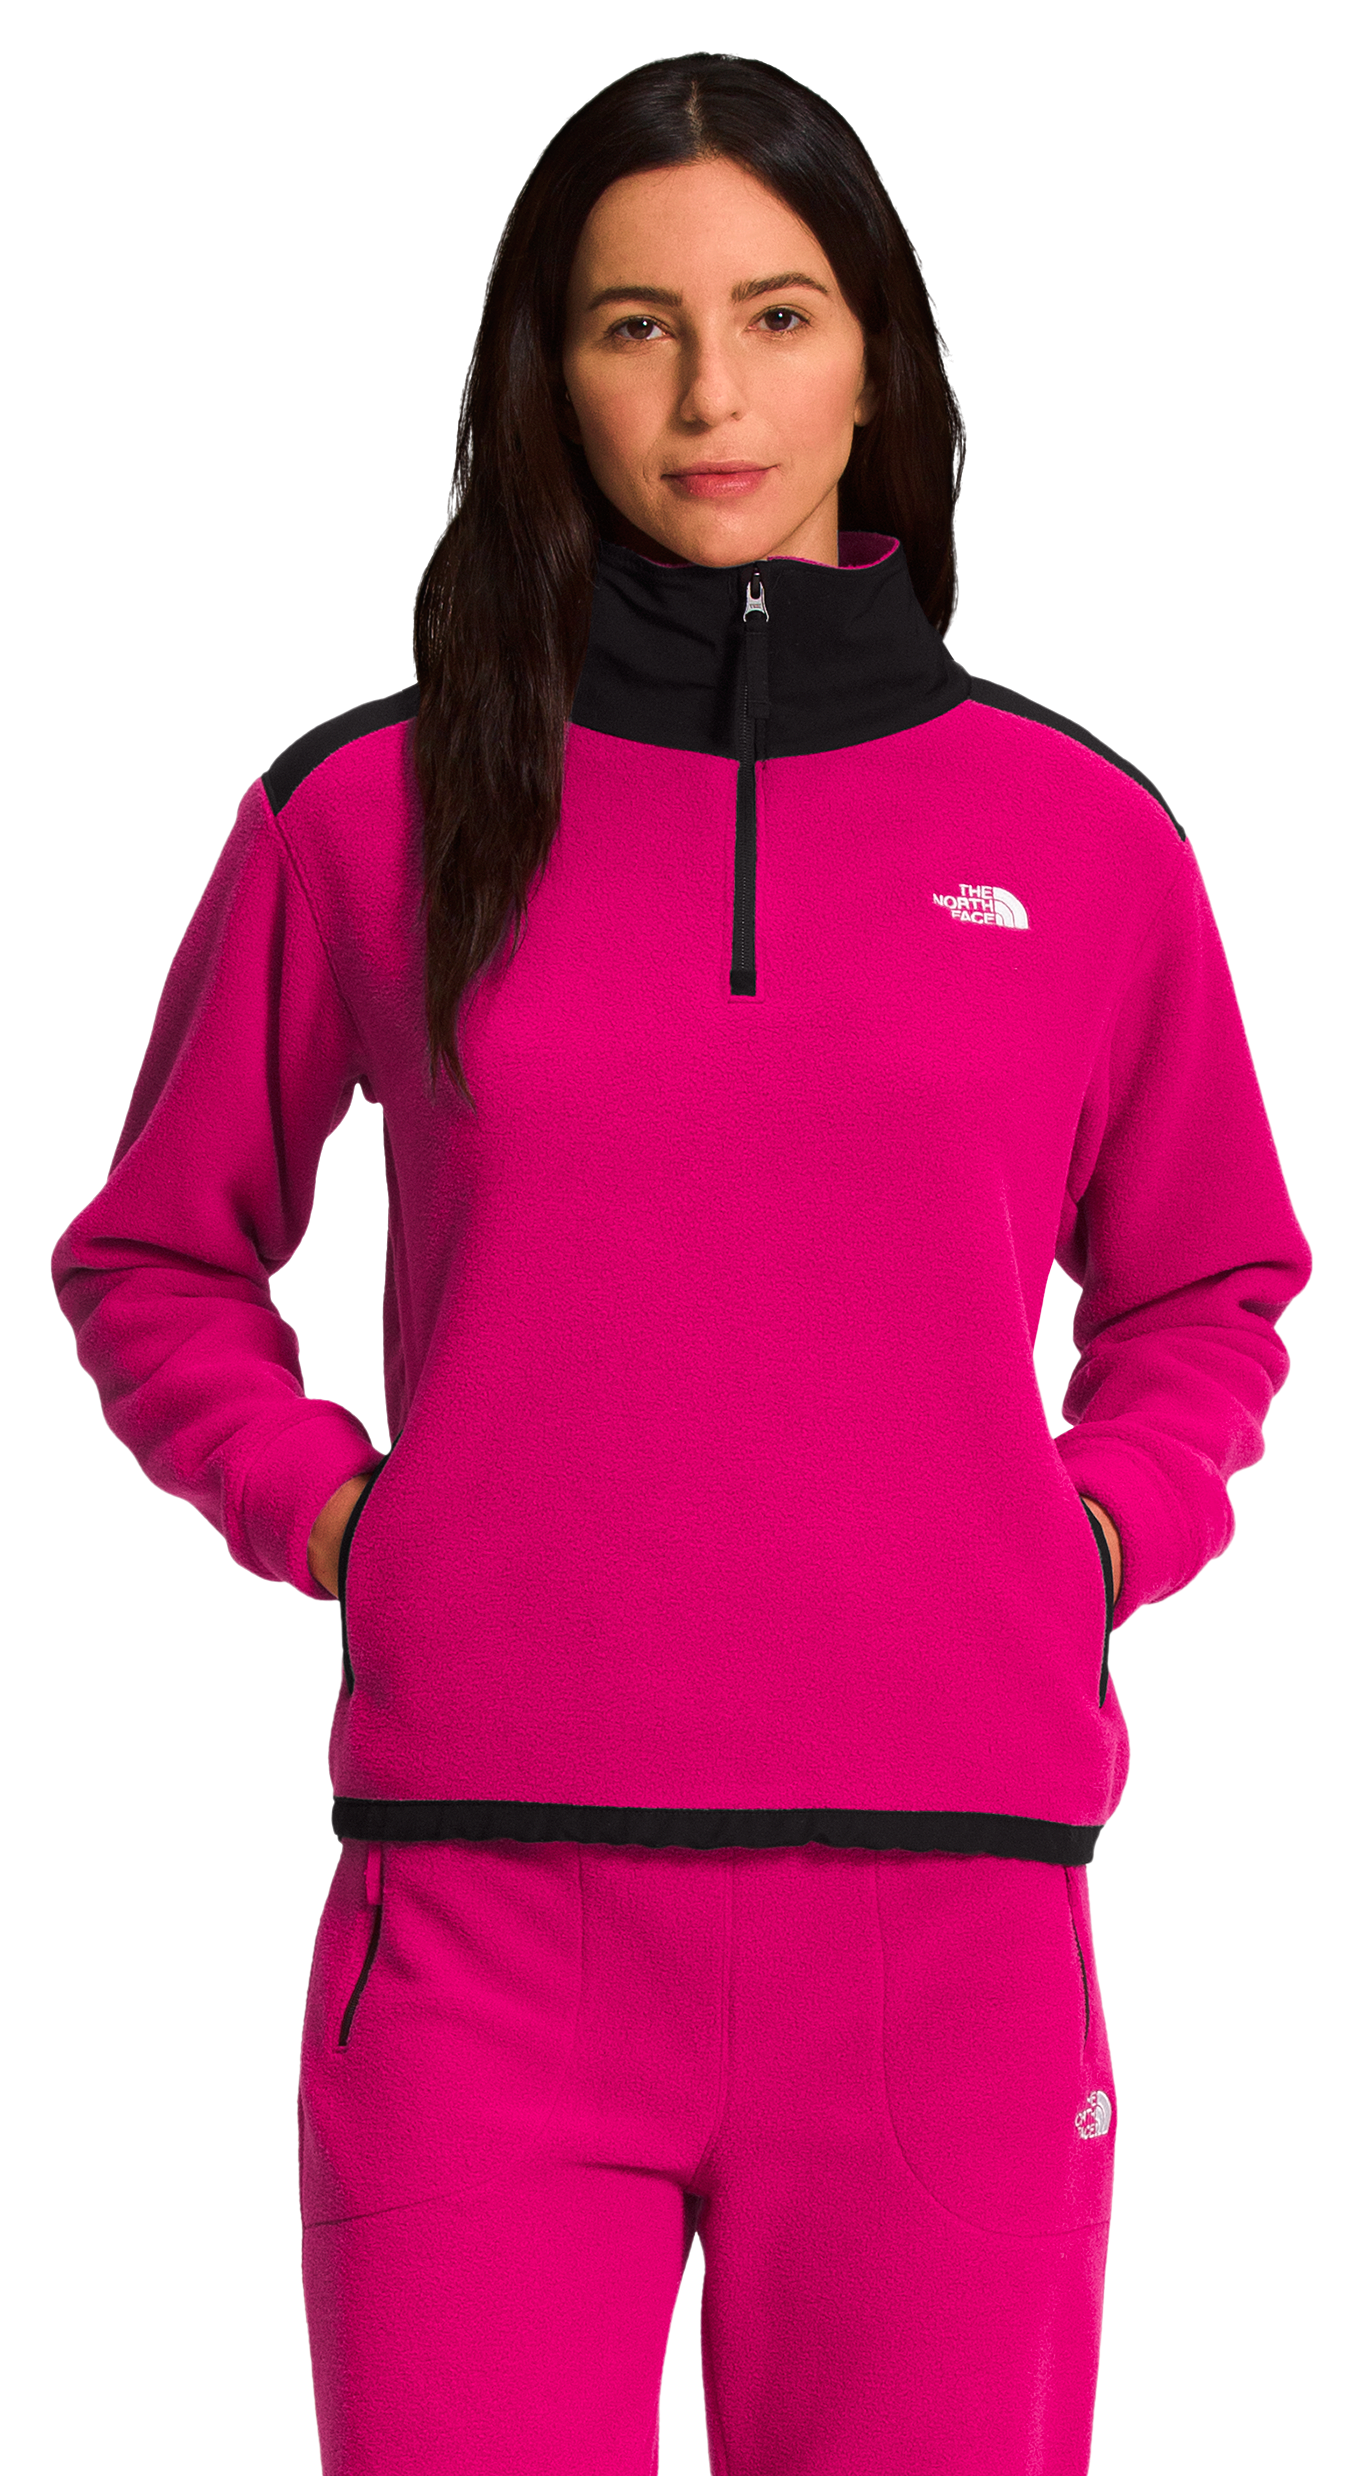 The North Face Alpine Polartec 200 Quarter-Zip Long-Sleeve Pullover for Ladies - Fuchsia Pink/TNF Black - S